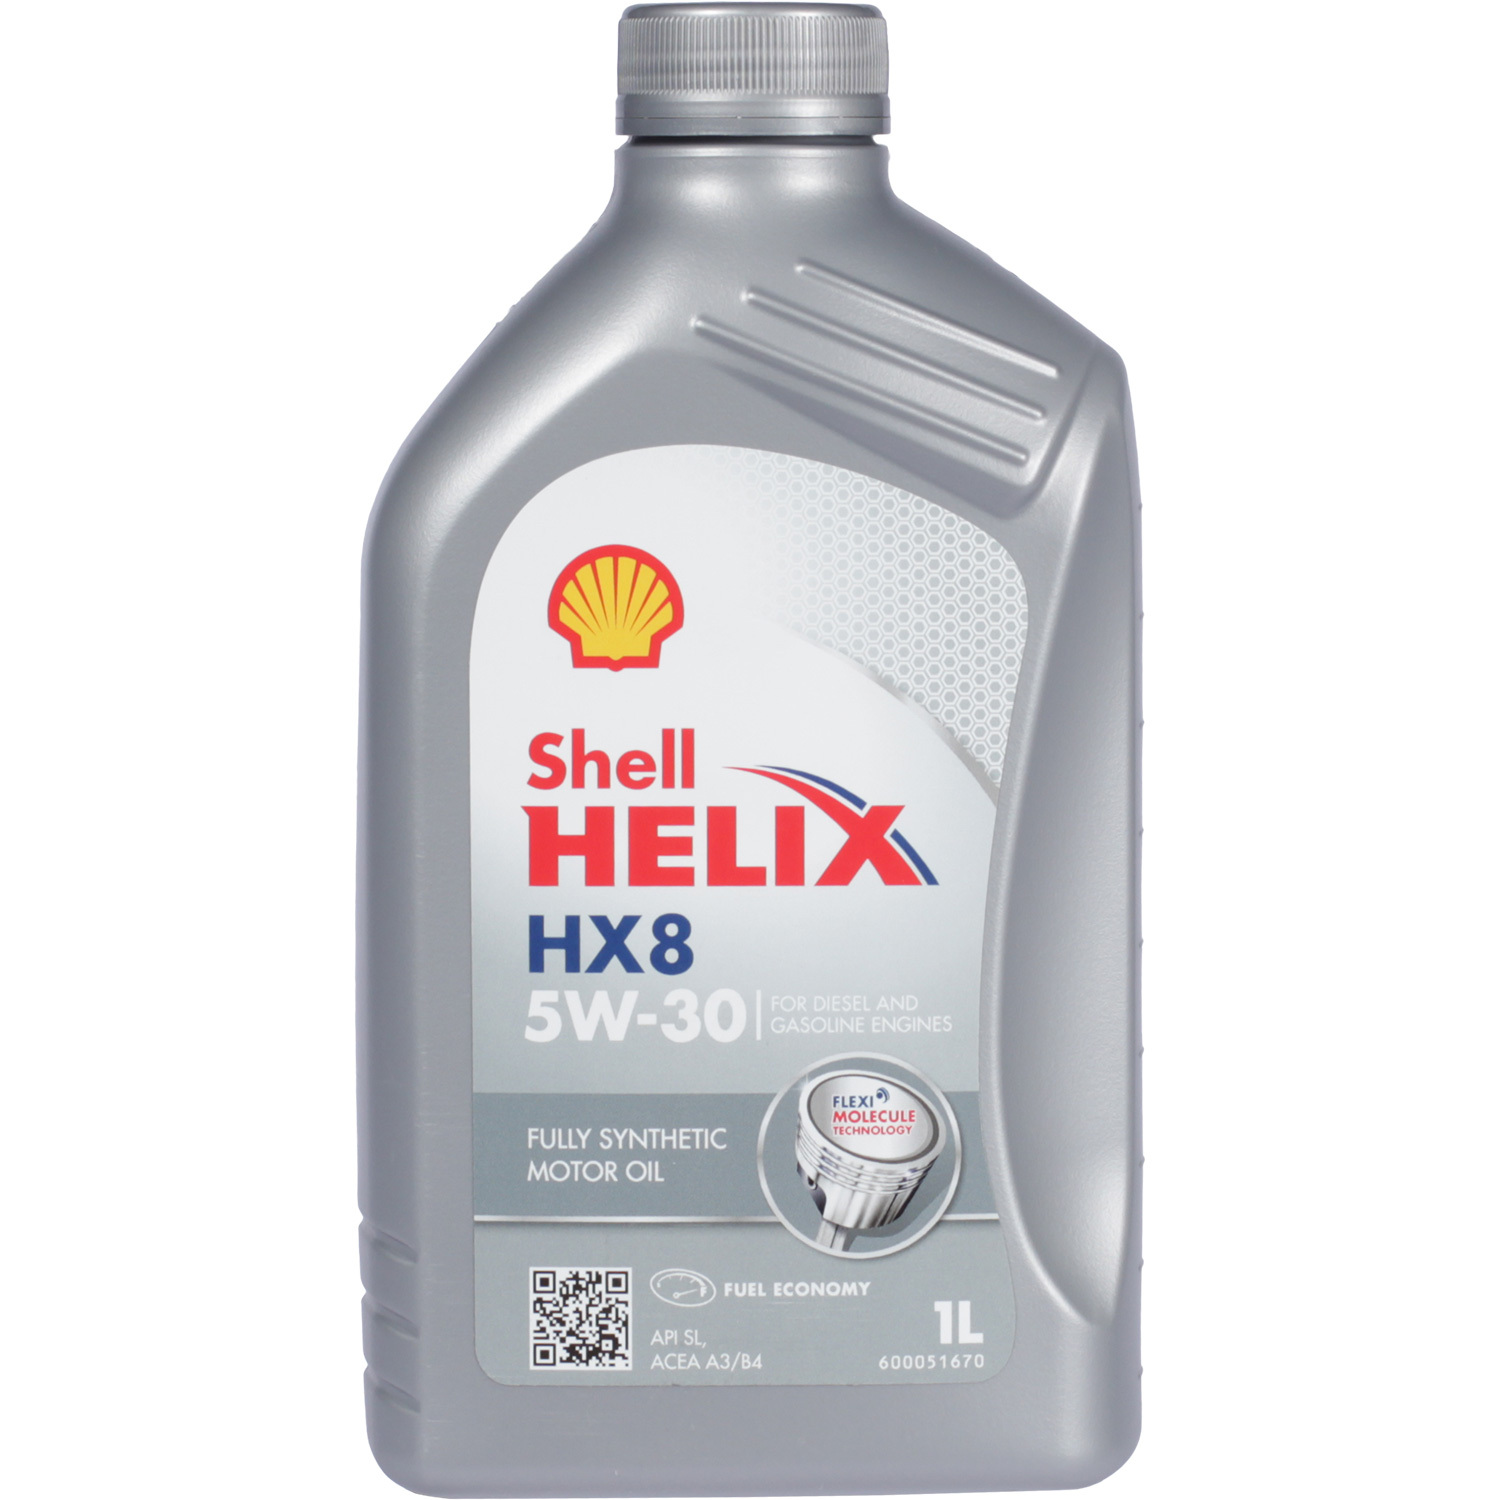 Shell Моторное масло Shell Helix HX8 5W-30, 1 л масло моторное shell helix hx8 5w 40 синтетическое 1 л 550040424